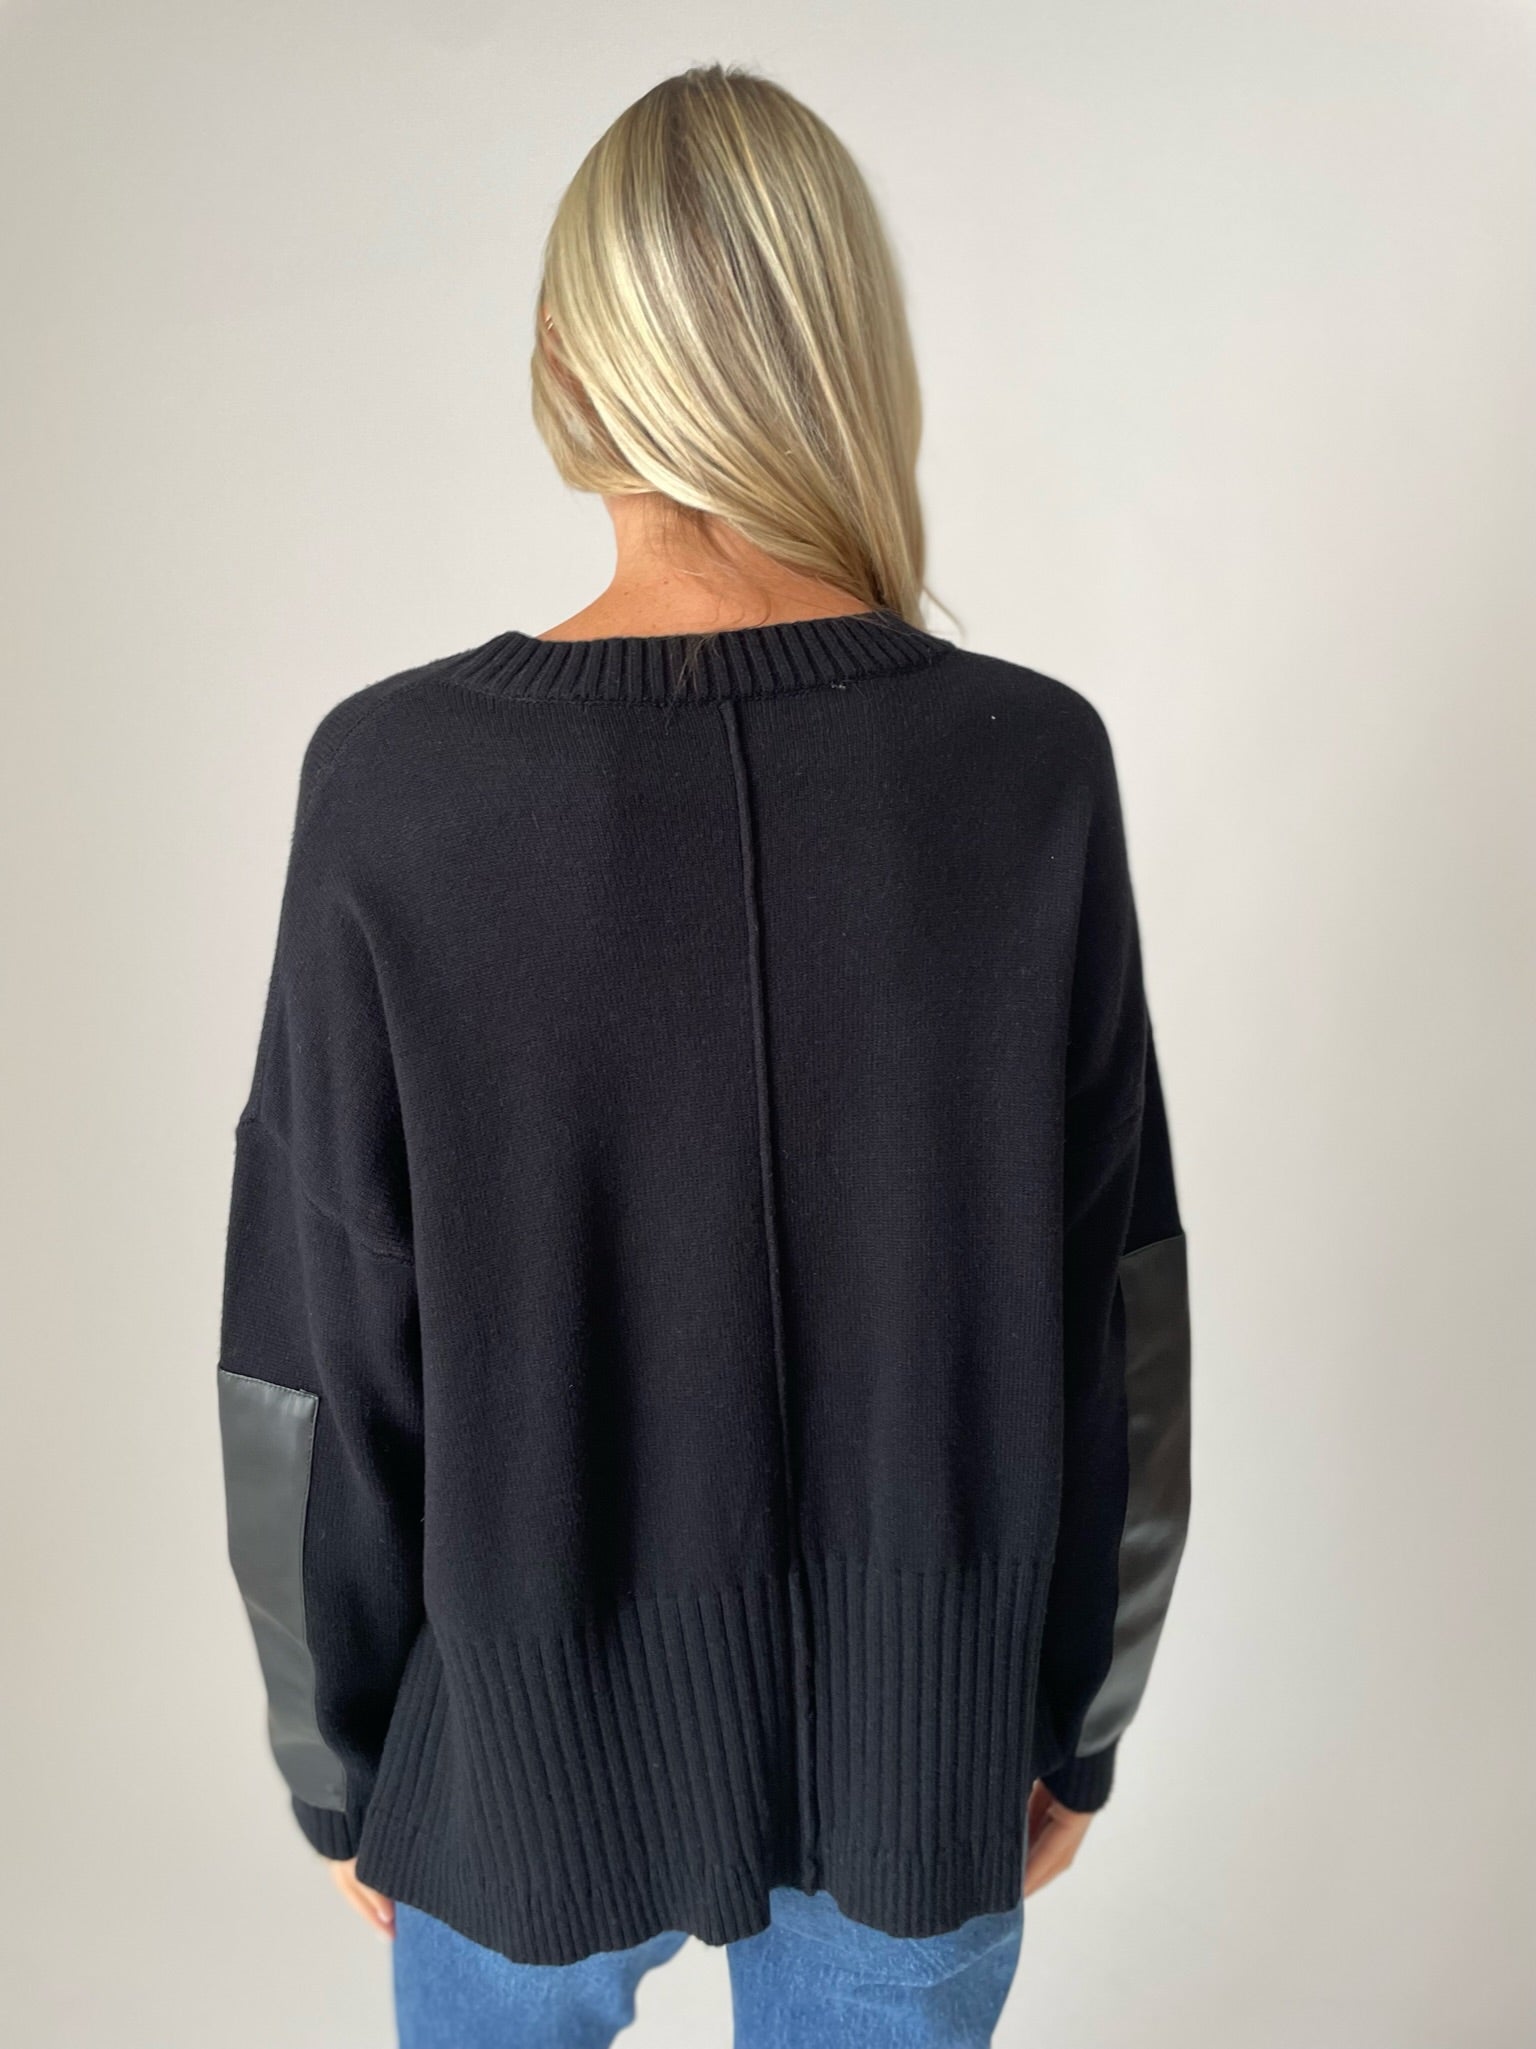 sloane sweater [black]